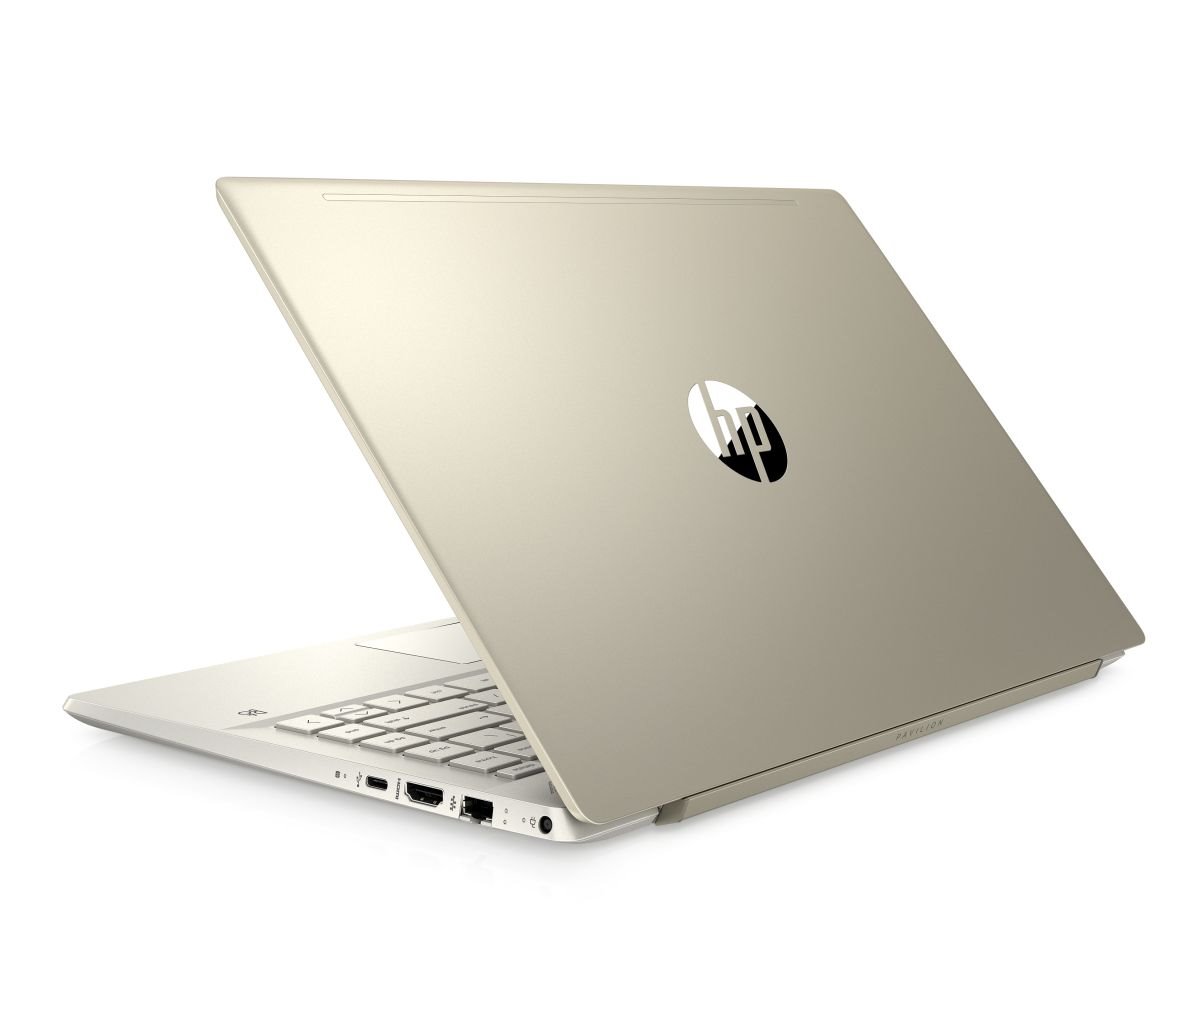 Laptop HP Pavilion 14-ce3018TU: laptop giá tốt, vừa tầm cho giới trẻ